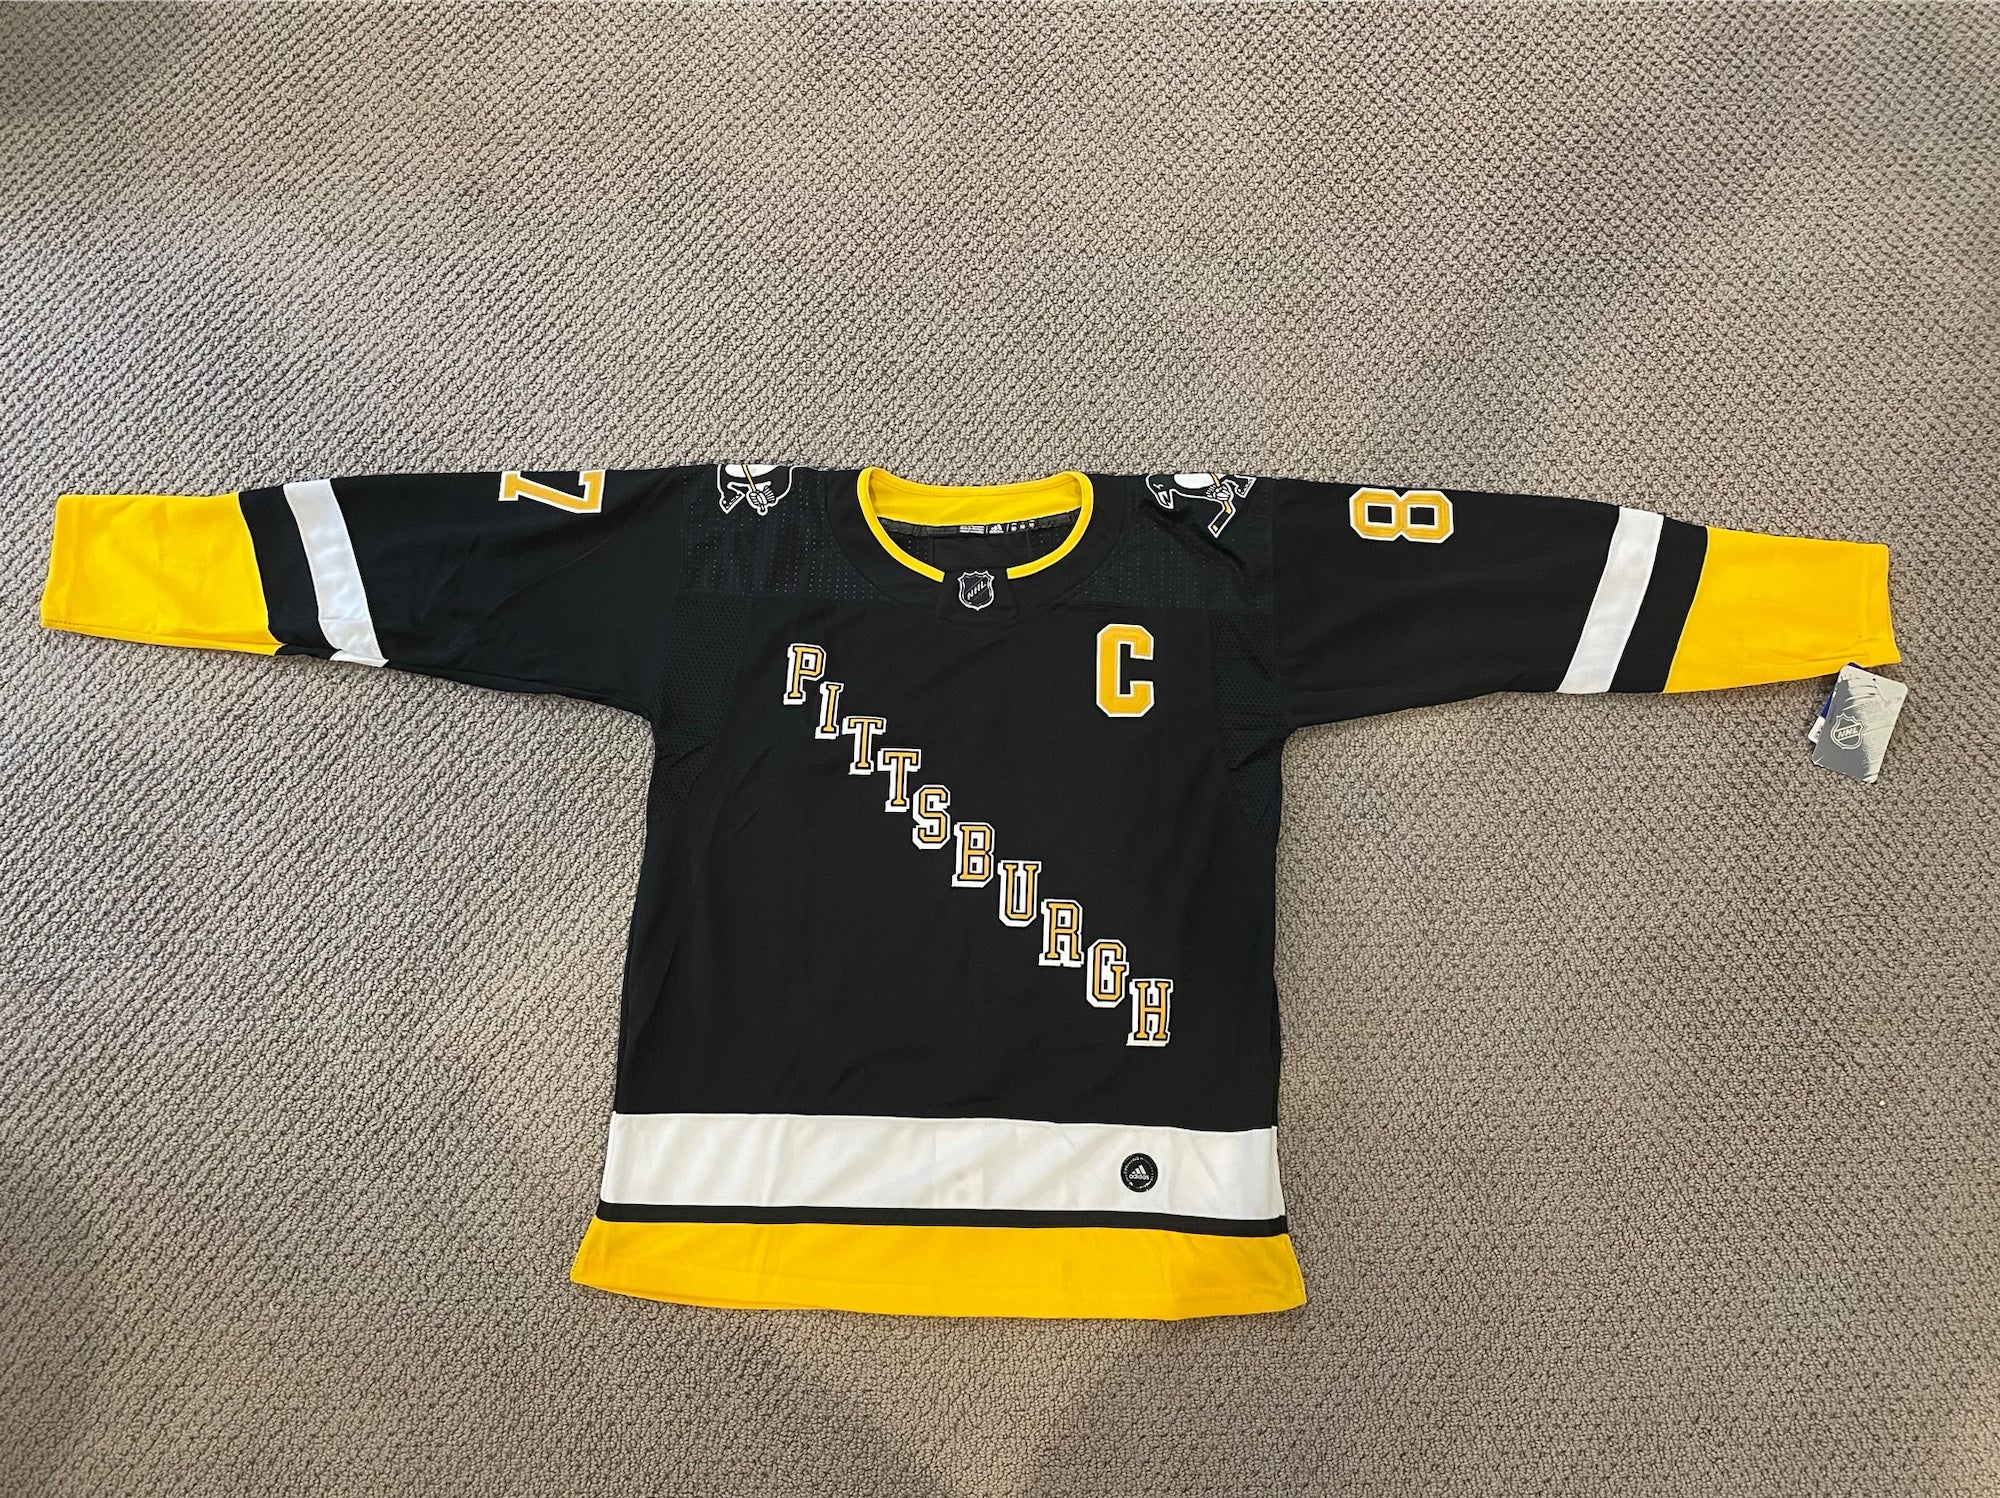 NWT Adidas Sidney Crosby Pittsburgh Penguins Reverse Retro Hockey